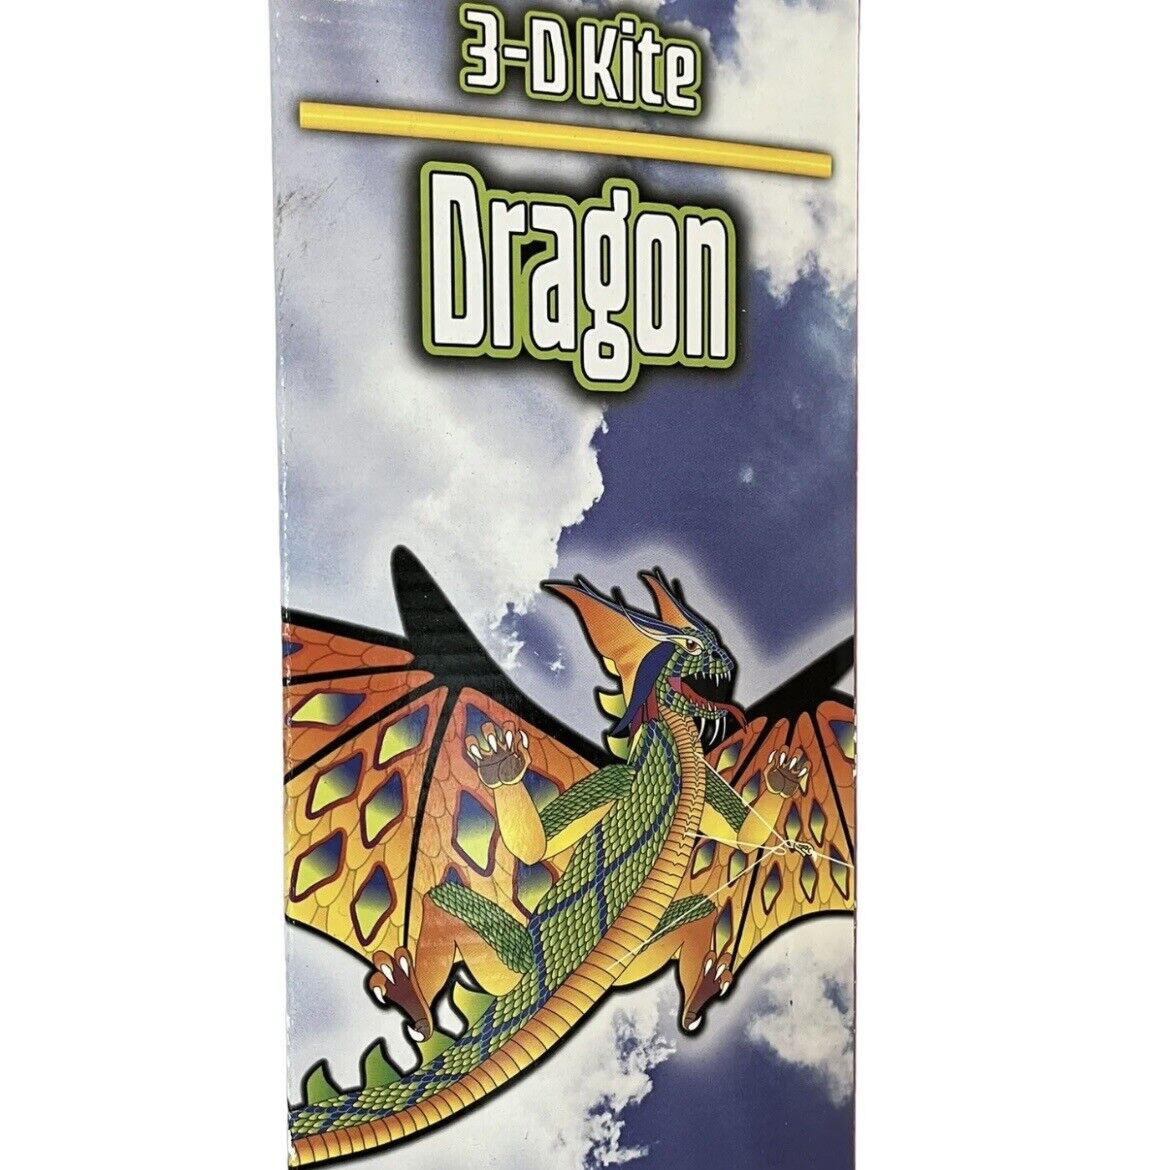 X Kites Dragon 3-D Kite 76 Inch Wingspan Full Body Ripstop Fabric TriWinder X Kites 999073